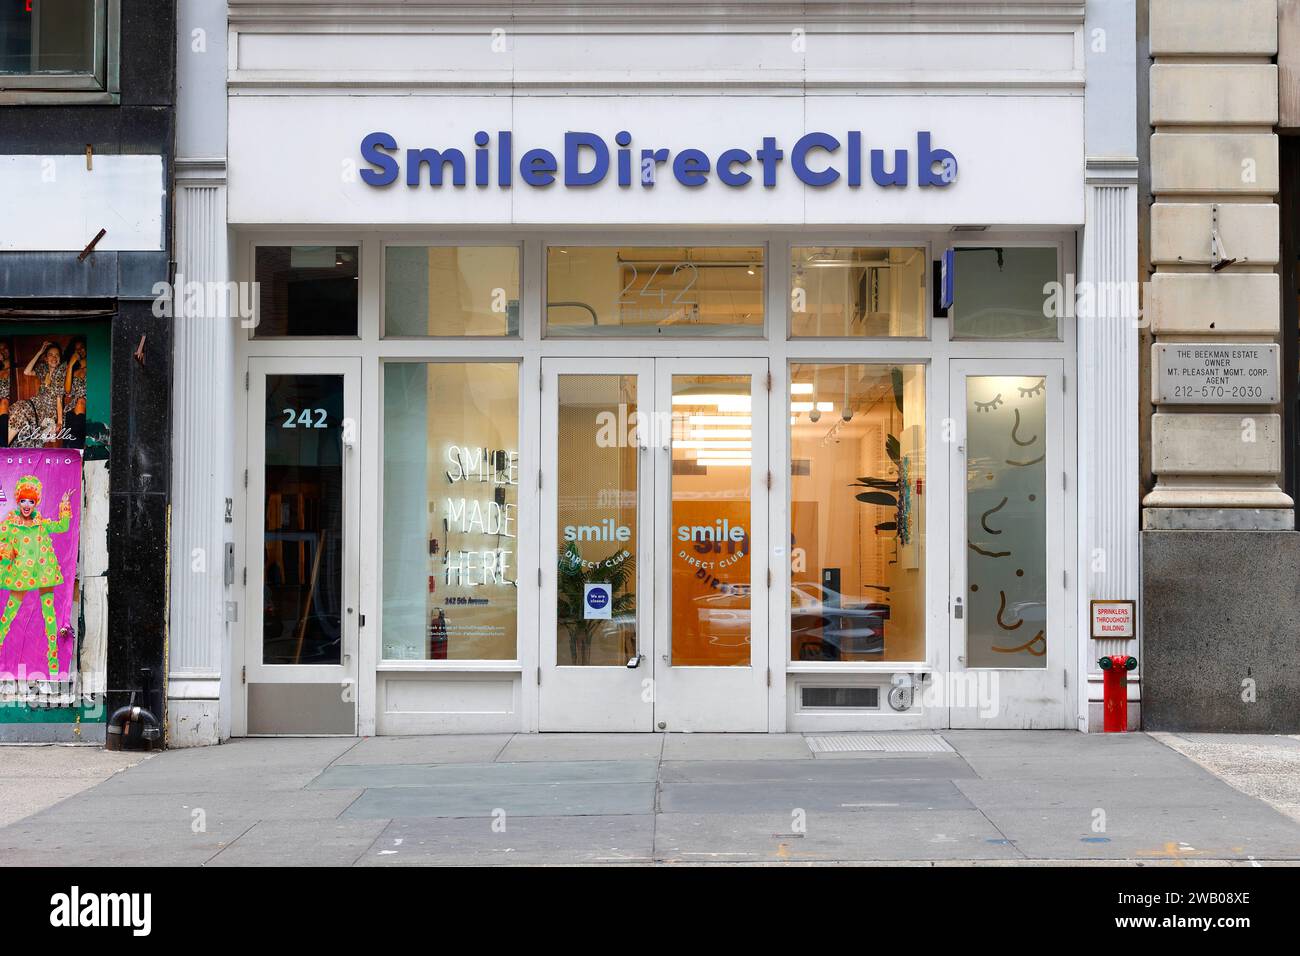 SmileDirectClub, 242 5th Ave, New York, New York, NYC Storefront Foto einer Firma für Zahnausrichtung Teledentistry. Stockfoto